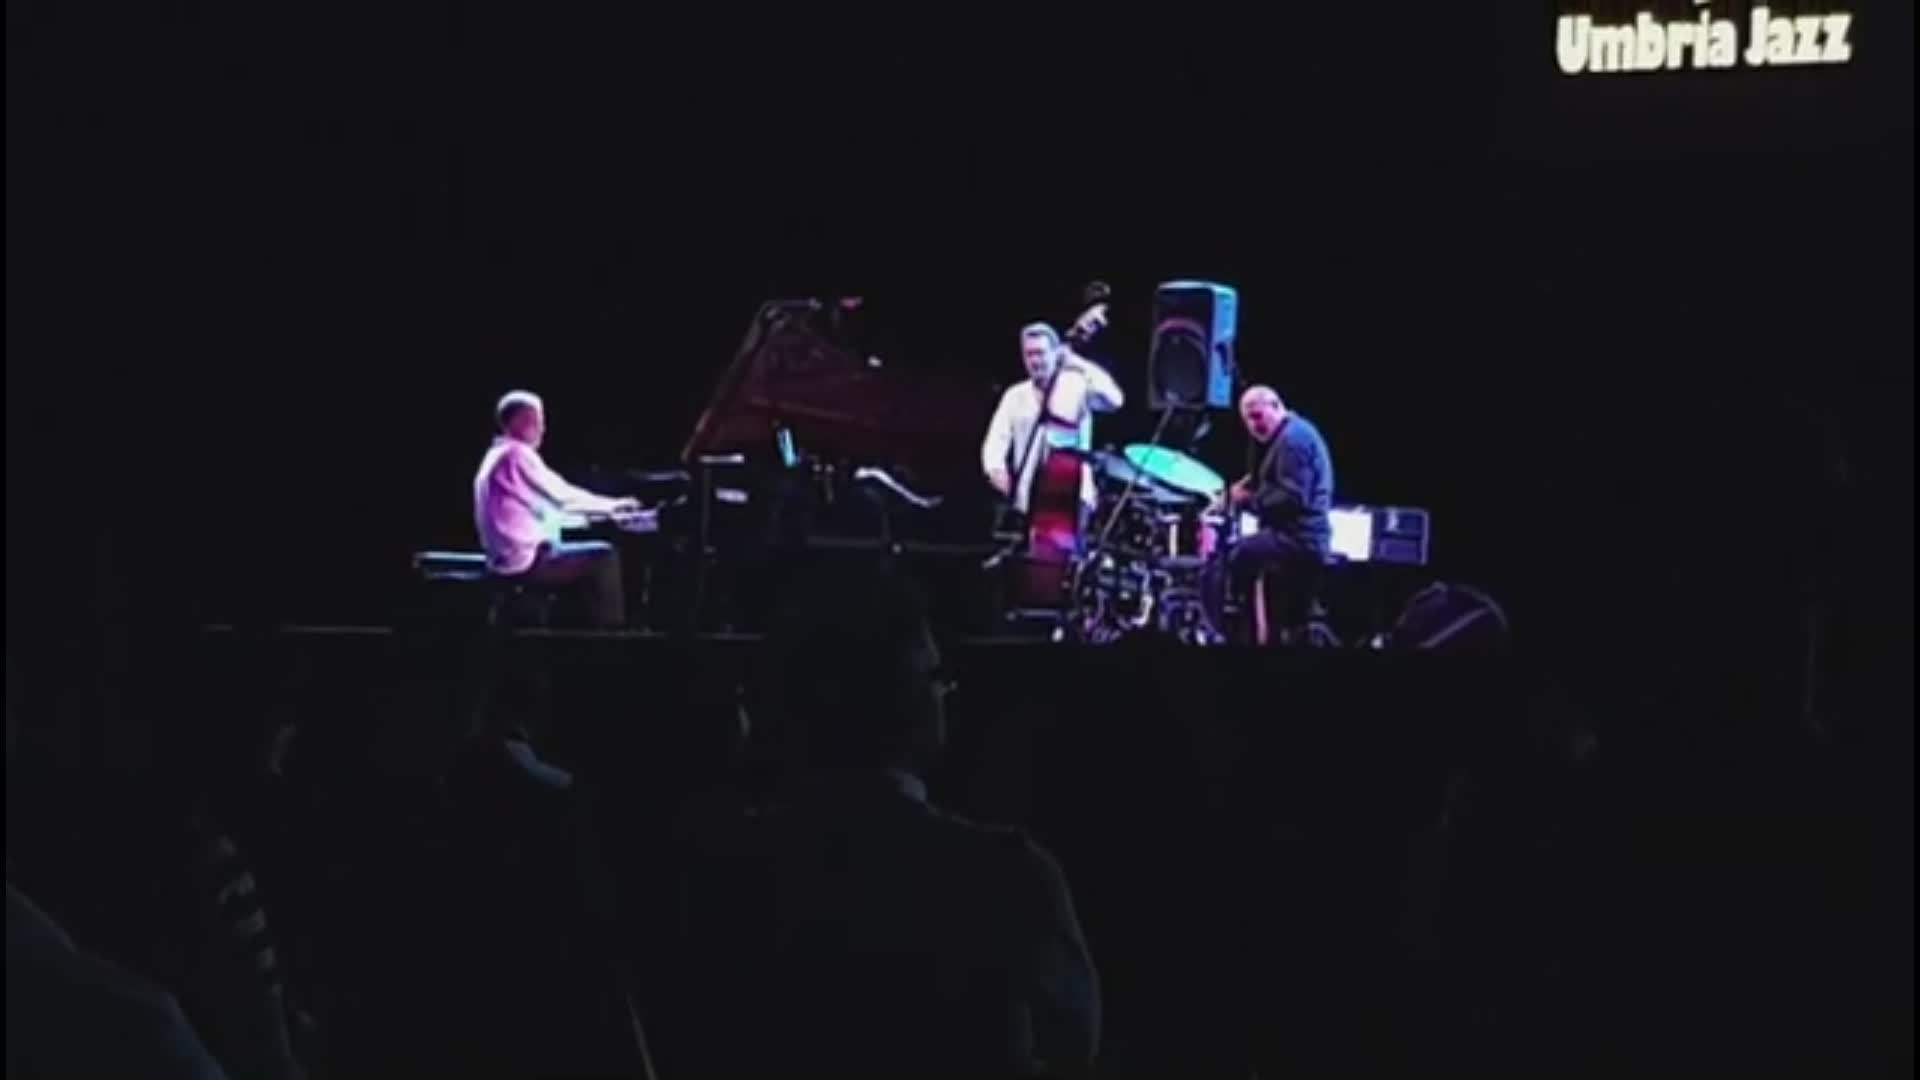 Umbria Jazz, successo per il trio Brad Mehldau al Santa Giuliana